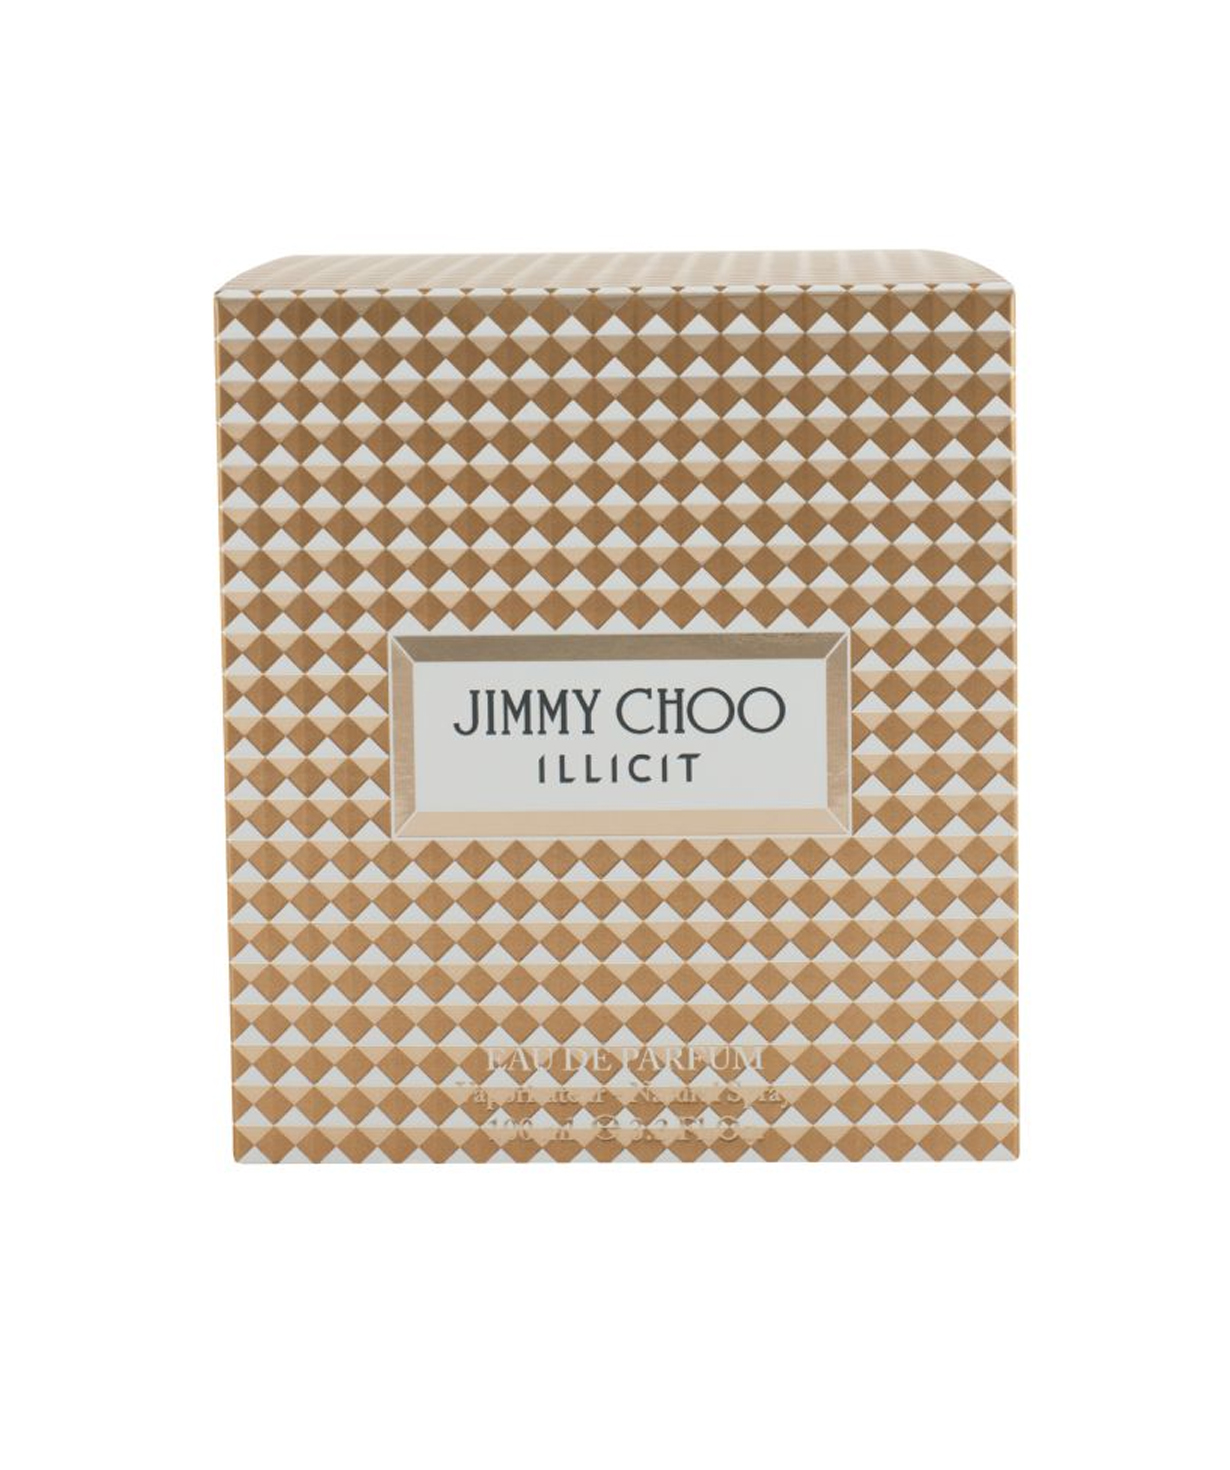 Perfume «Jimmy Choo» Illicit, for women, 100 ml